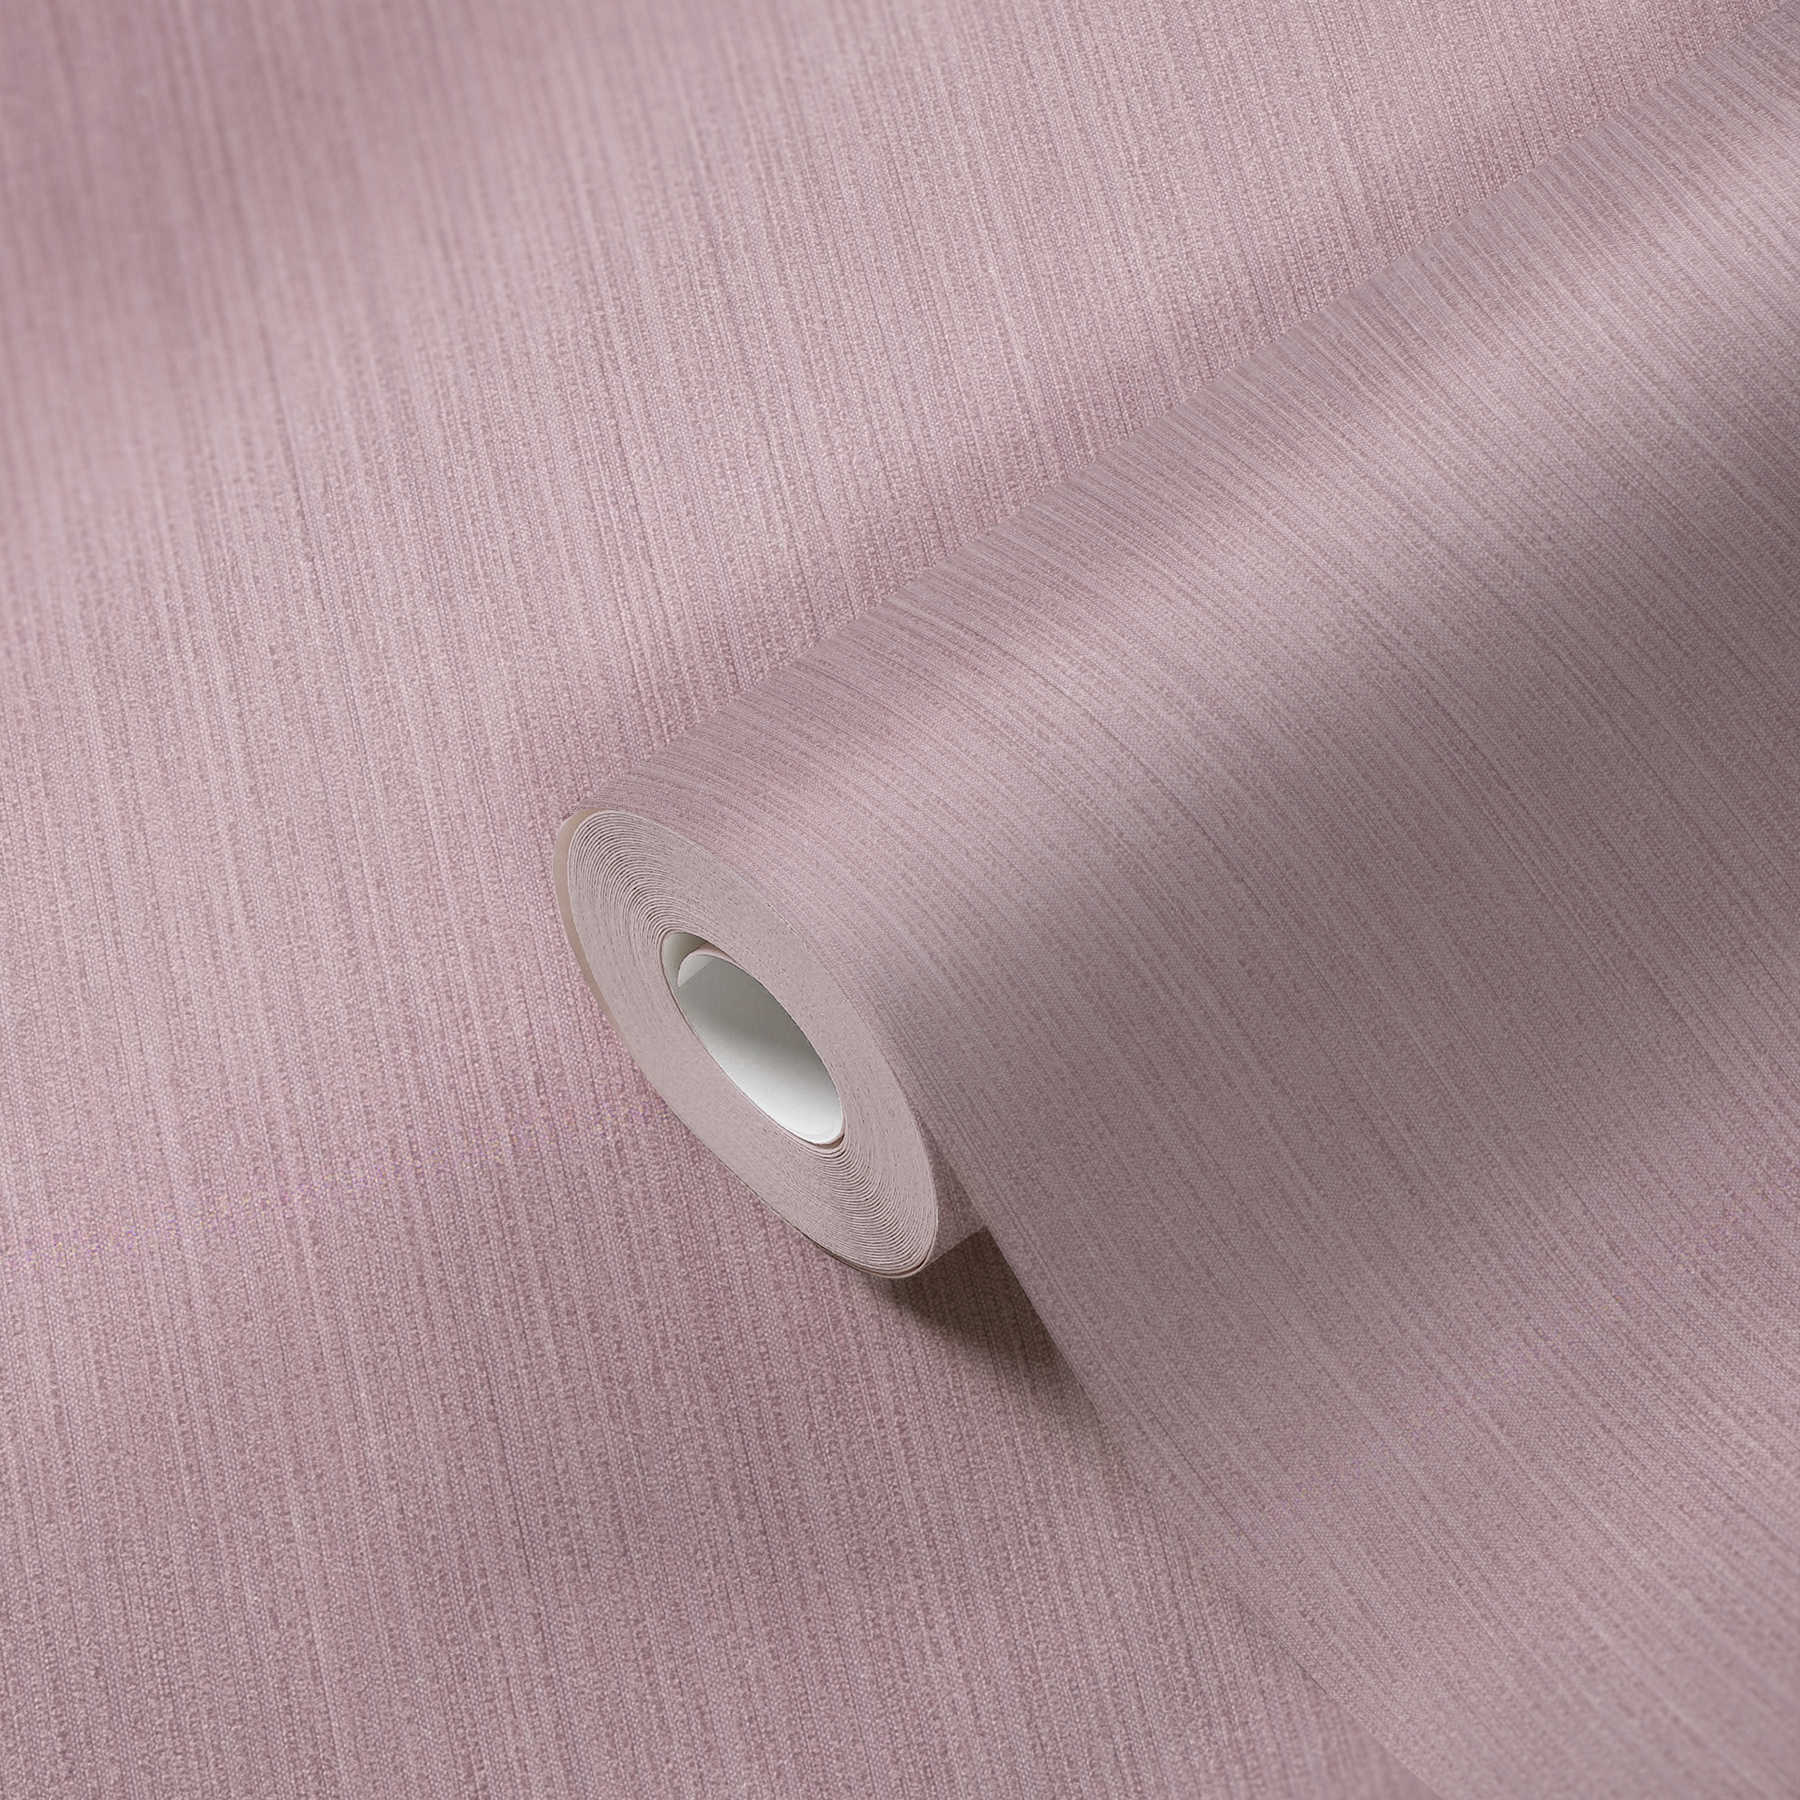             Papel pintado MICHALSKY forrado con textura - violeta, rosa
        